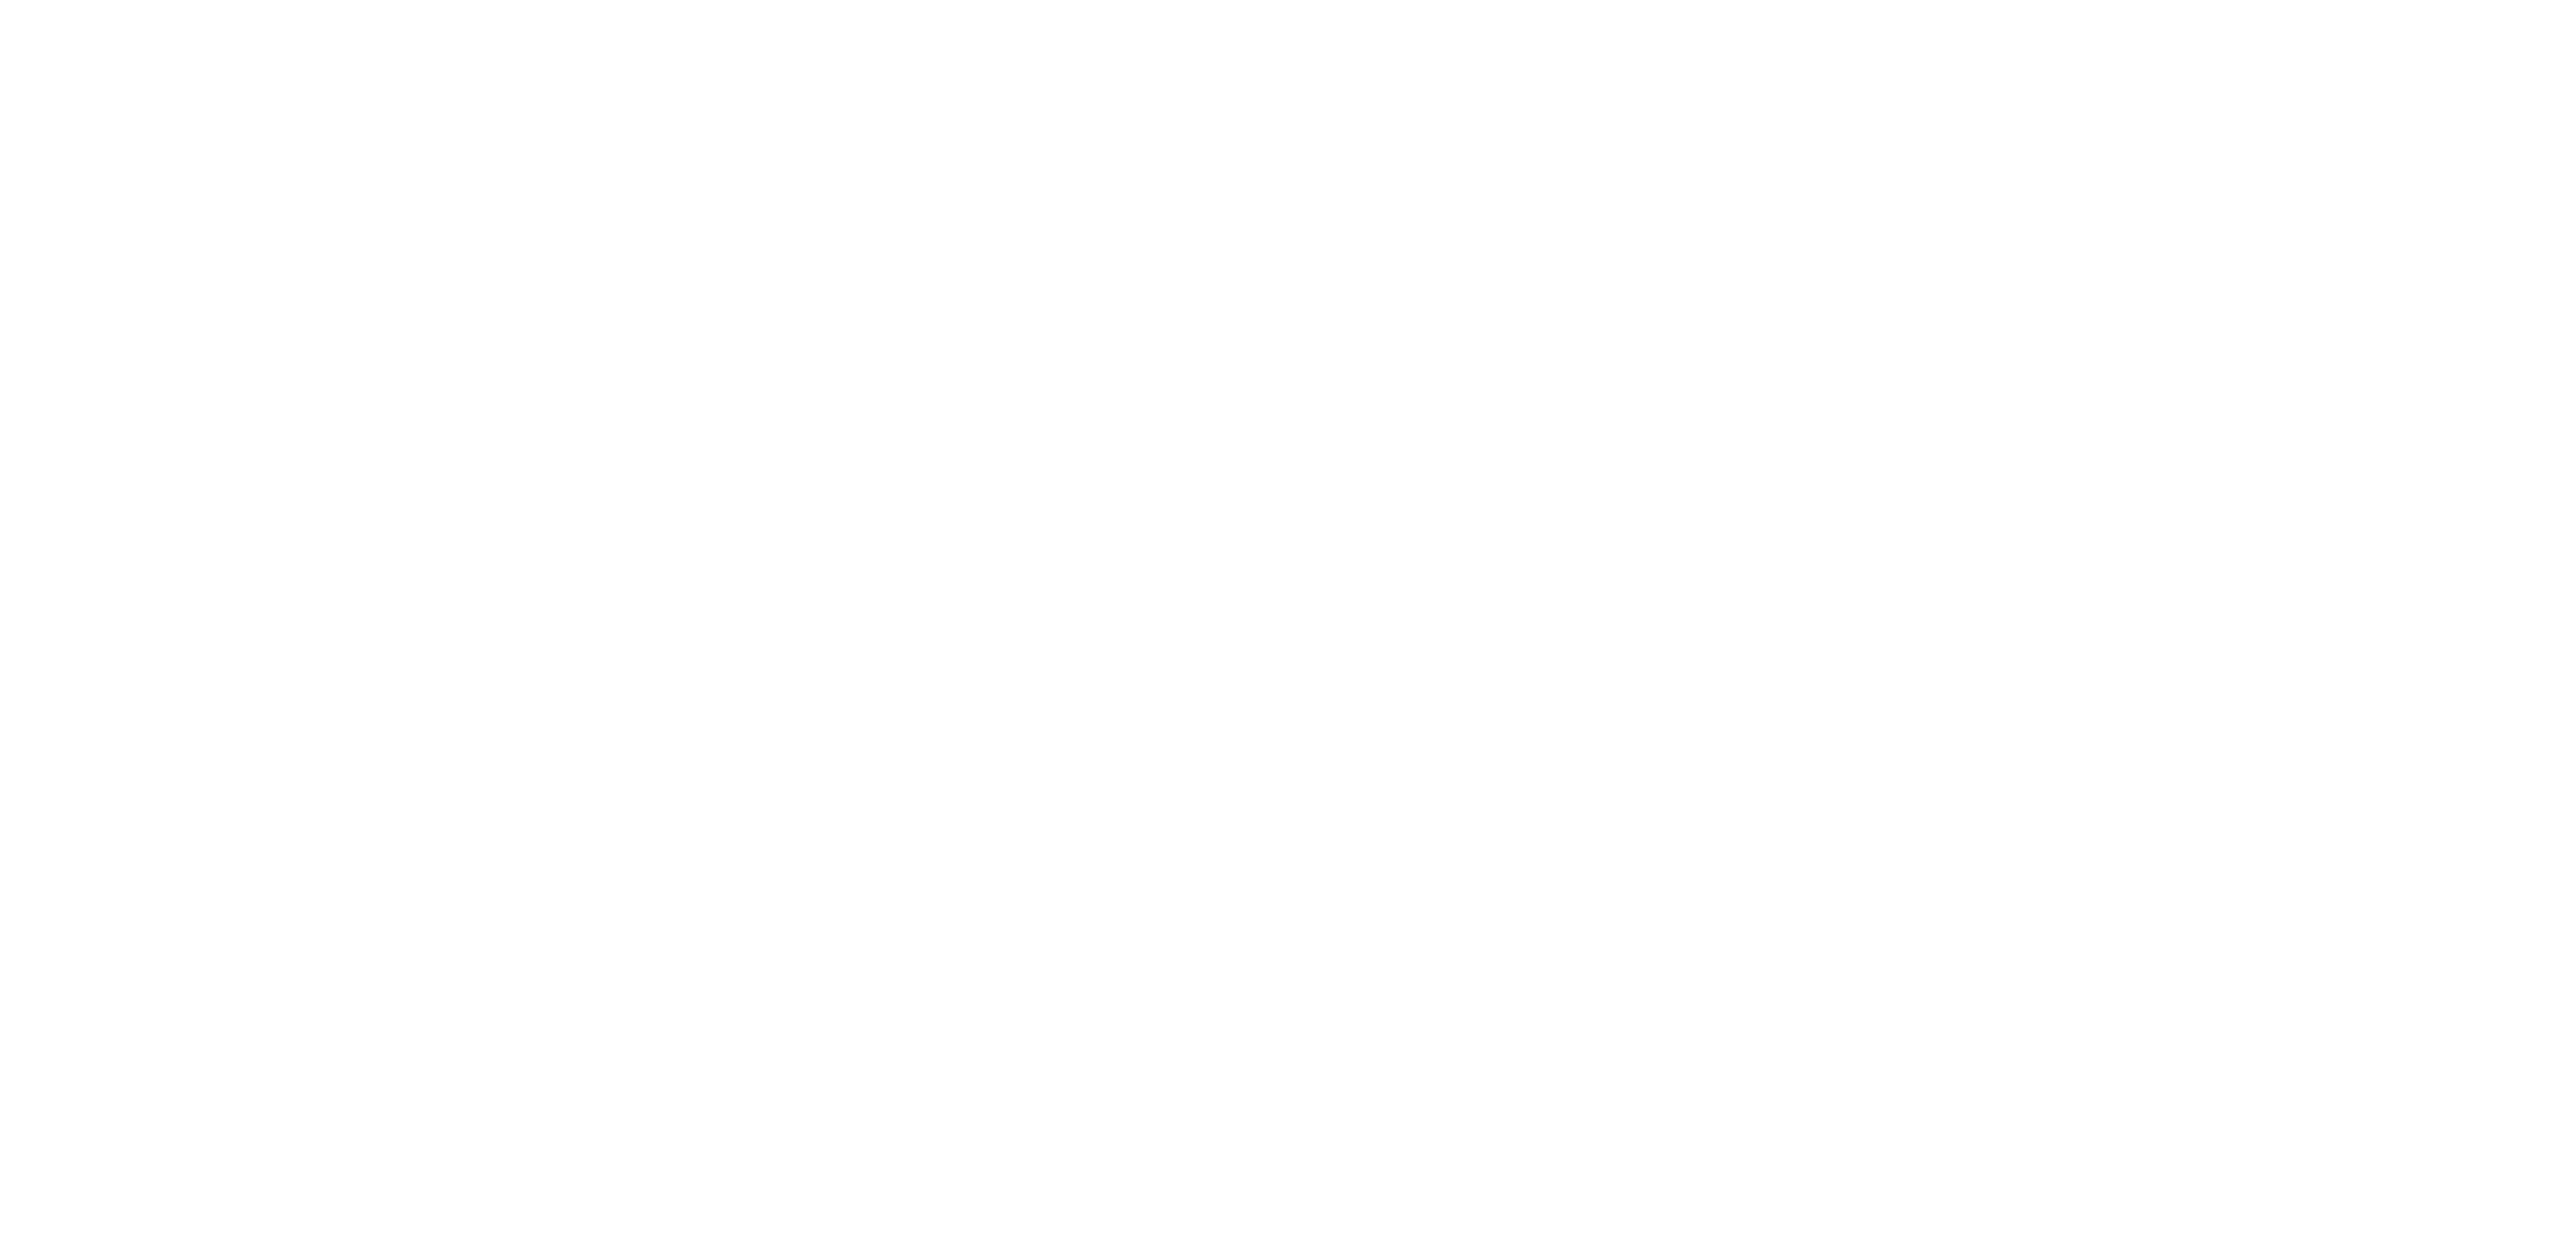 Kavita-lendingarsida-A-lavera